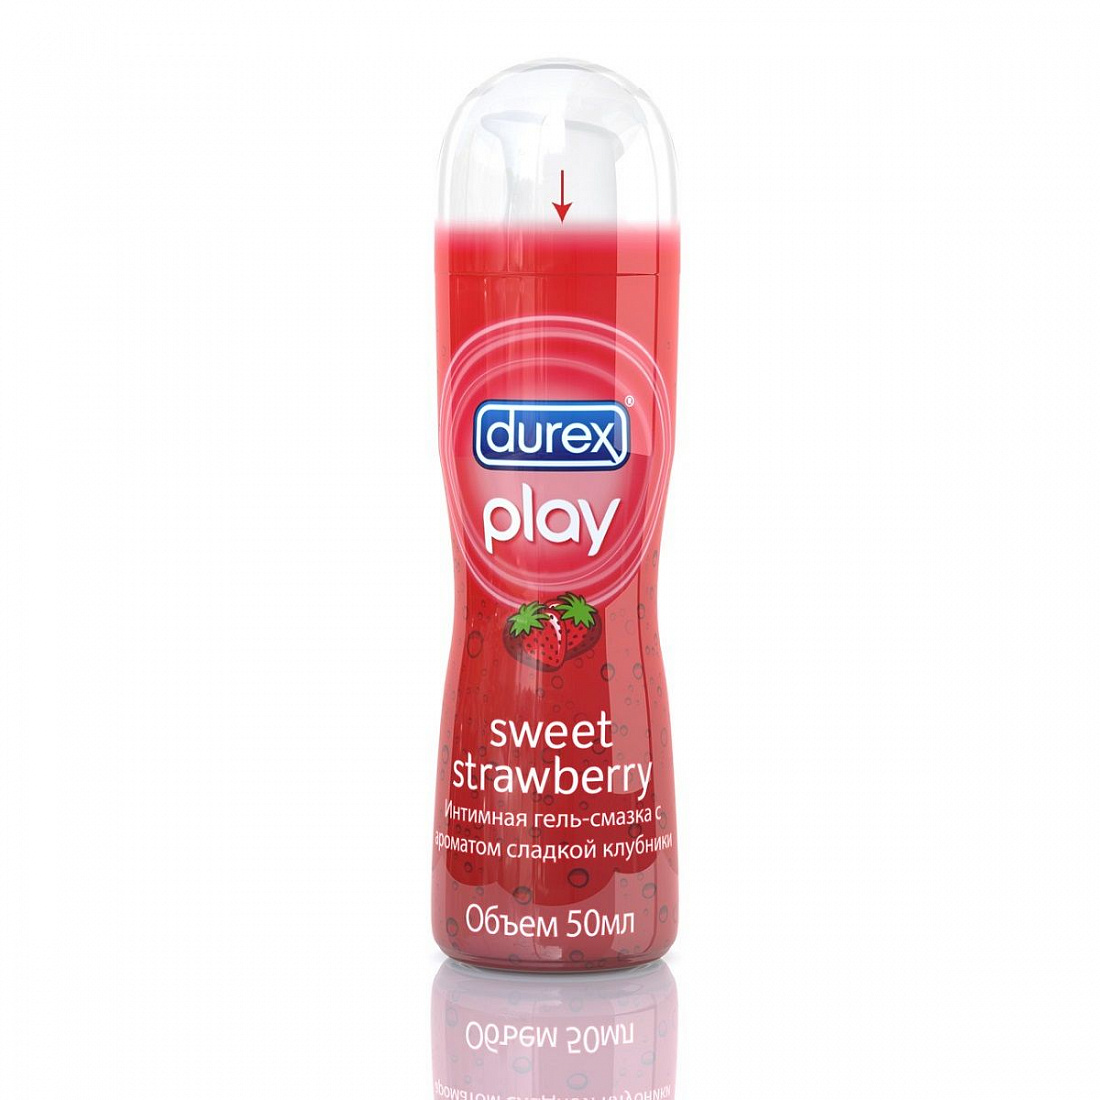 Интимная гель-смазка DUREX Play Sweet Strawberry с ароматом сладкой клубники - 50 мл. Durex DUREX Play Sweet Strawberry 50 ml - цена 